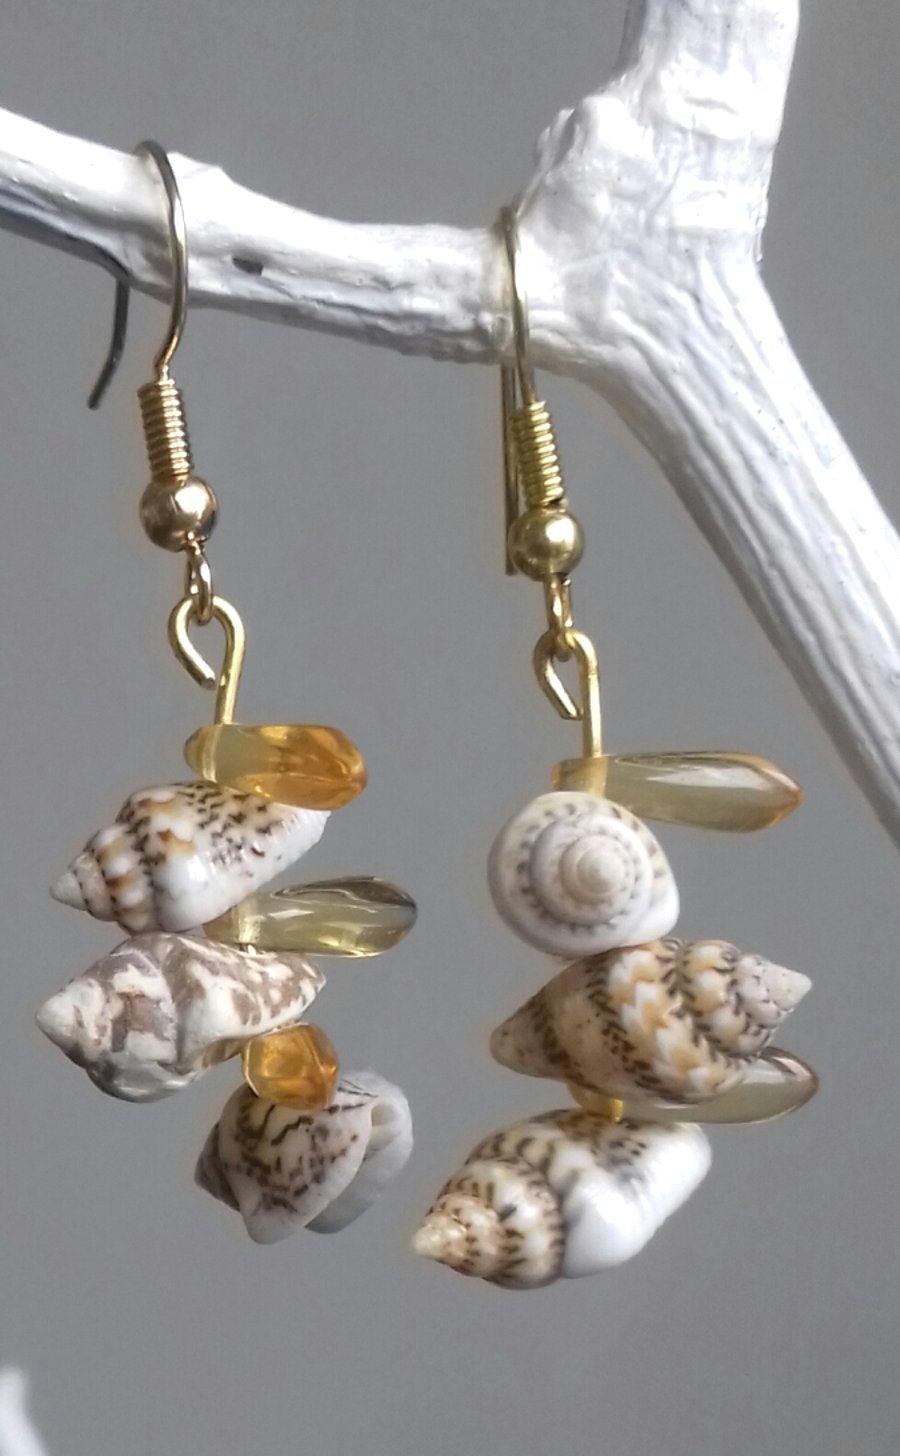 Dangly Earrings - "She Sells 3 Shells" Beach-combers Hand-Made Earrings